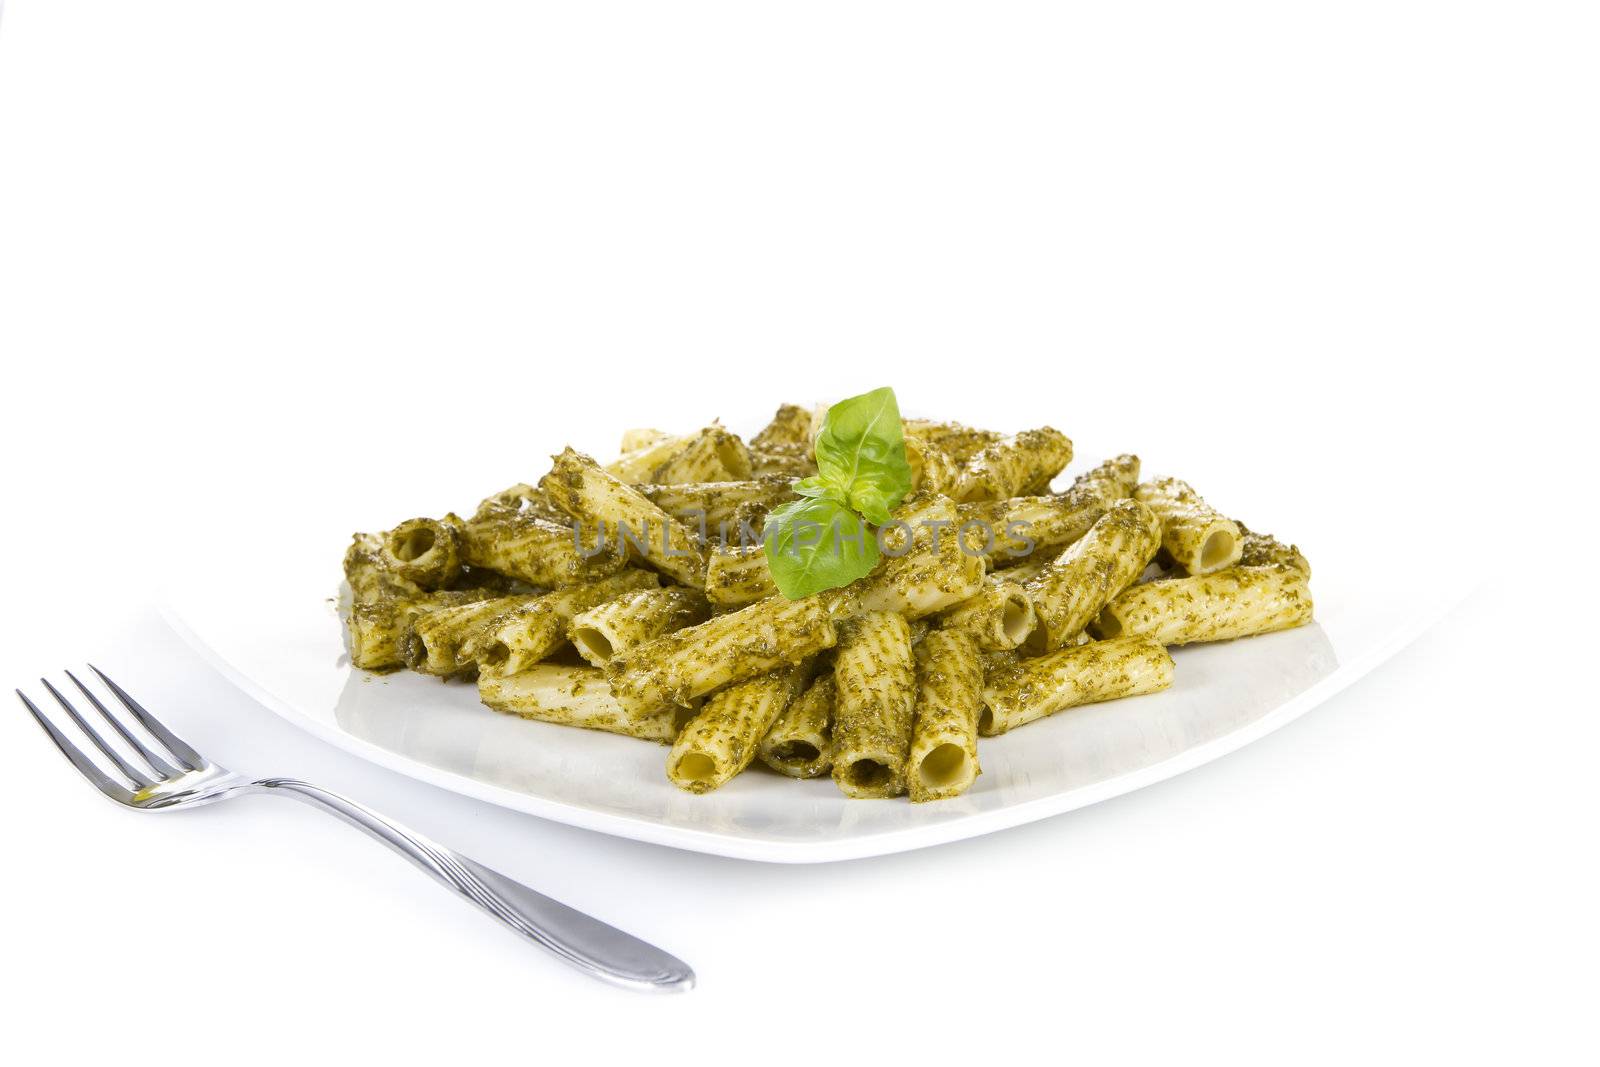 Pasta with italian pesto sauce by caldix